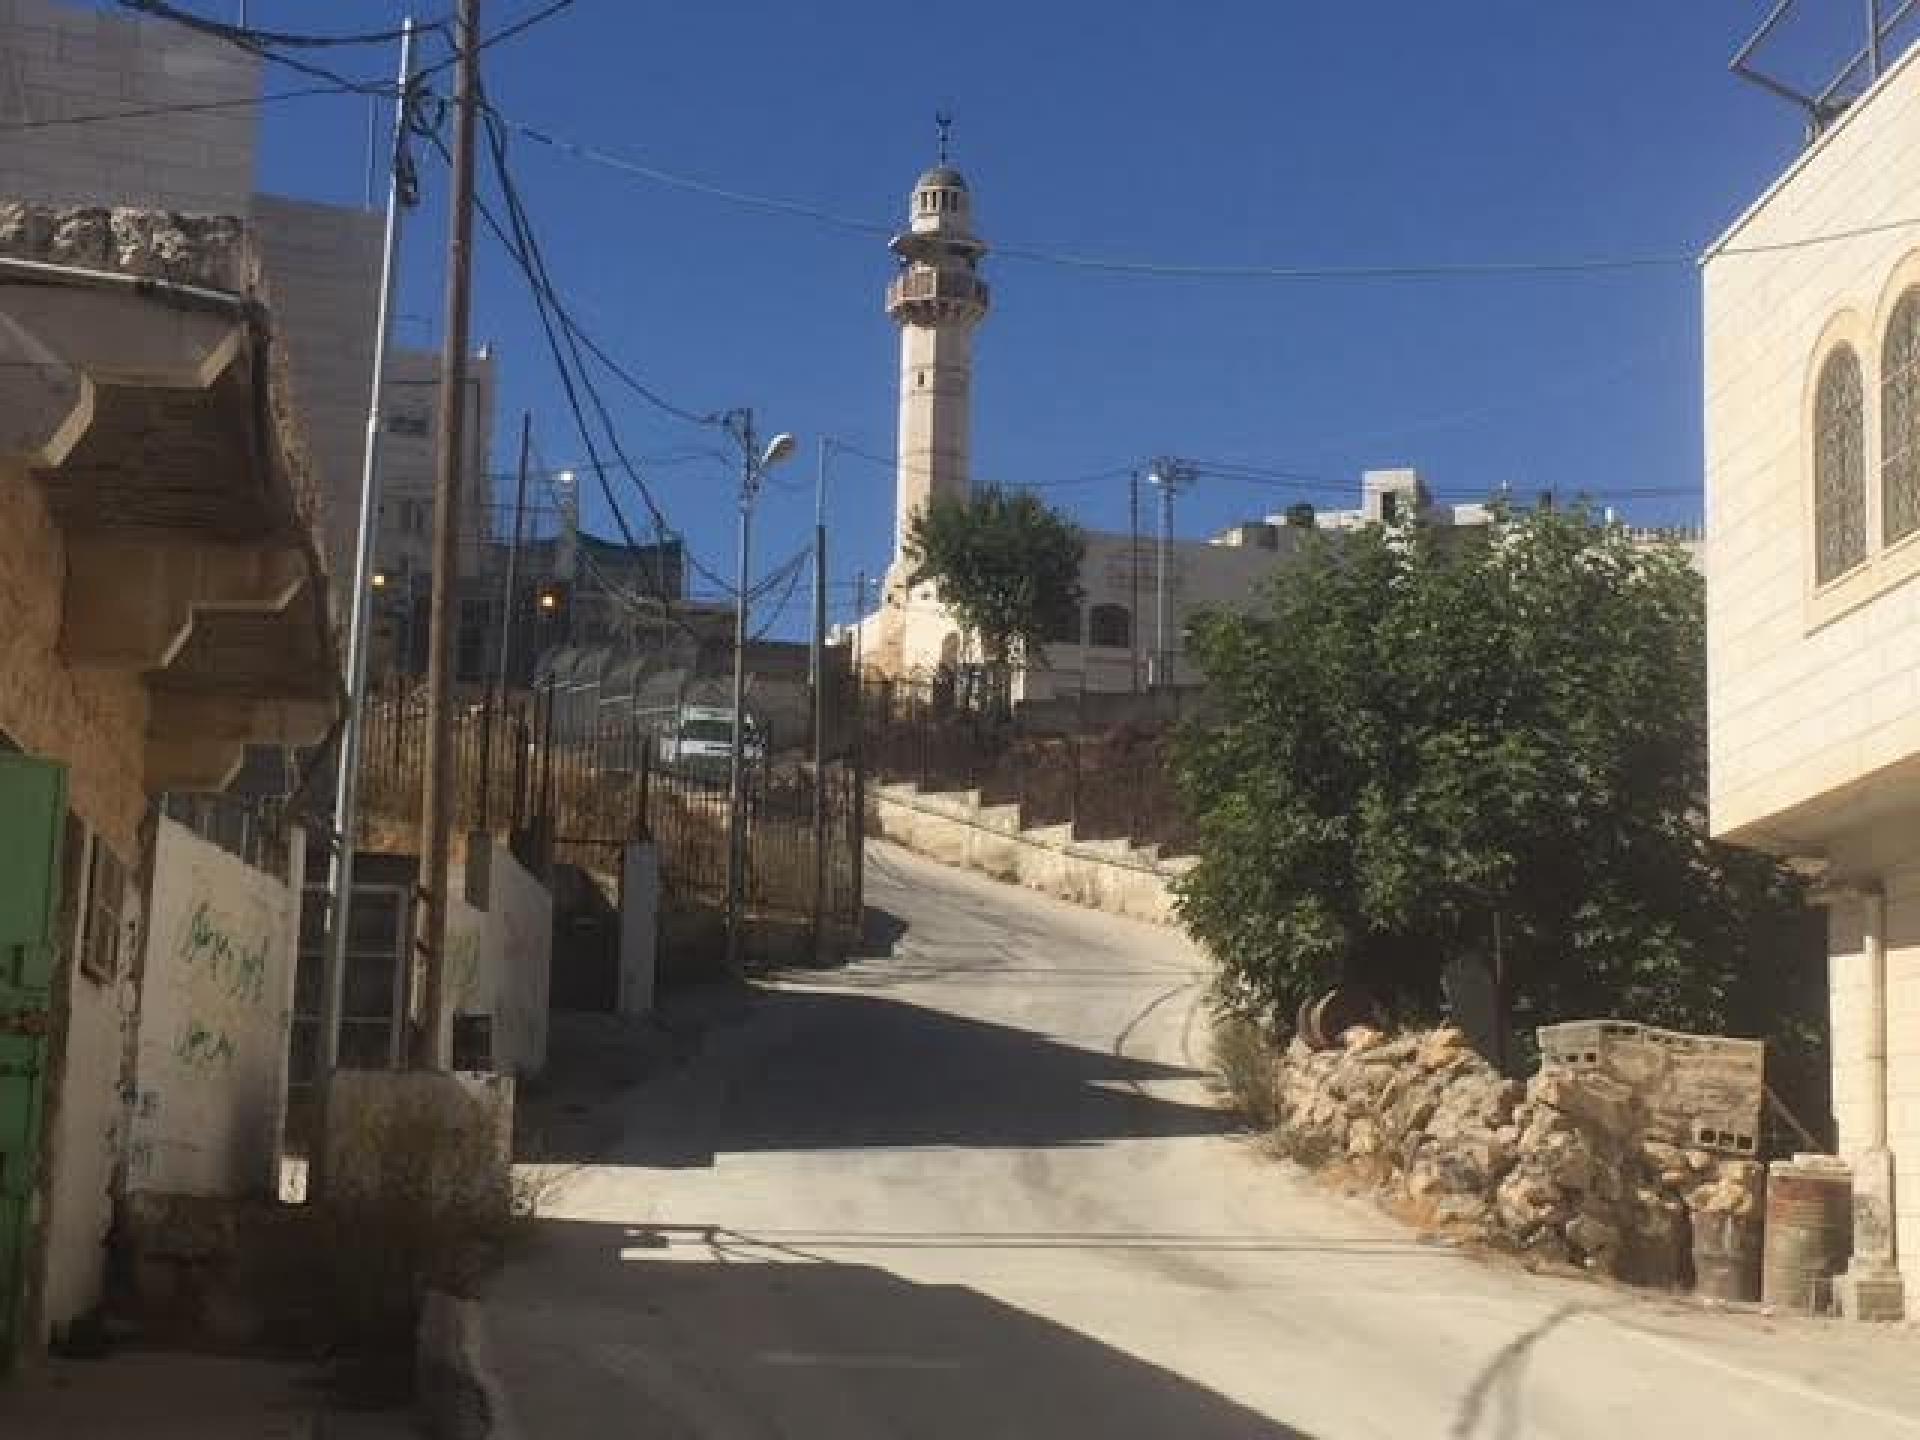 Tel Rumaida checkpoint viewed from below